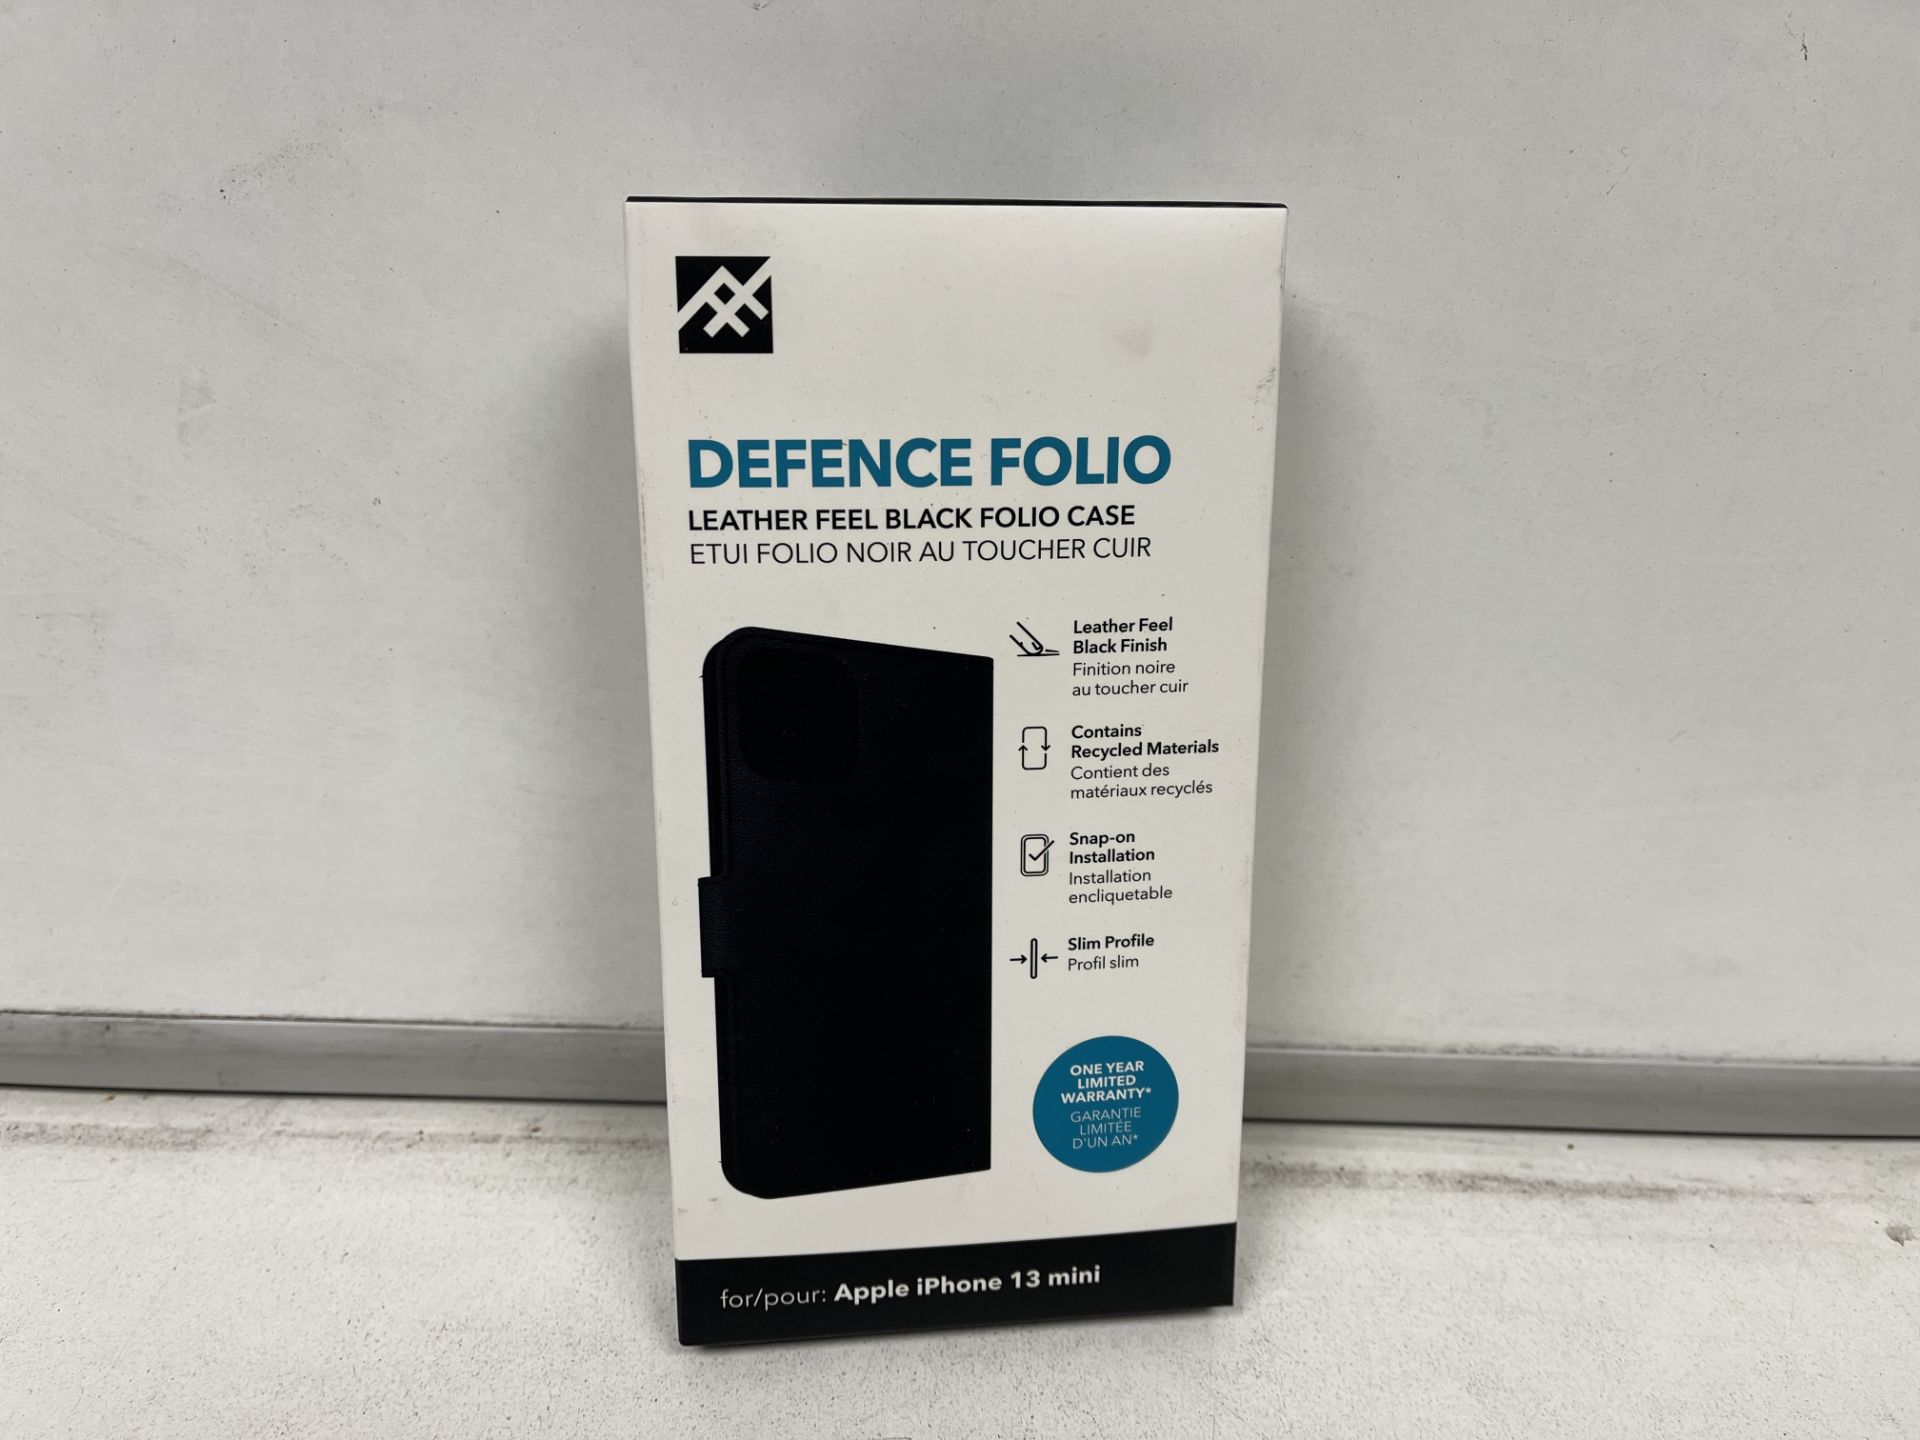 48 X NEW BOXED DEFENCE FOLIO LEATHER FEEL BLACK FOLIO CASES FOR APPLE iPHONE 13 MINI. ROW16RACK